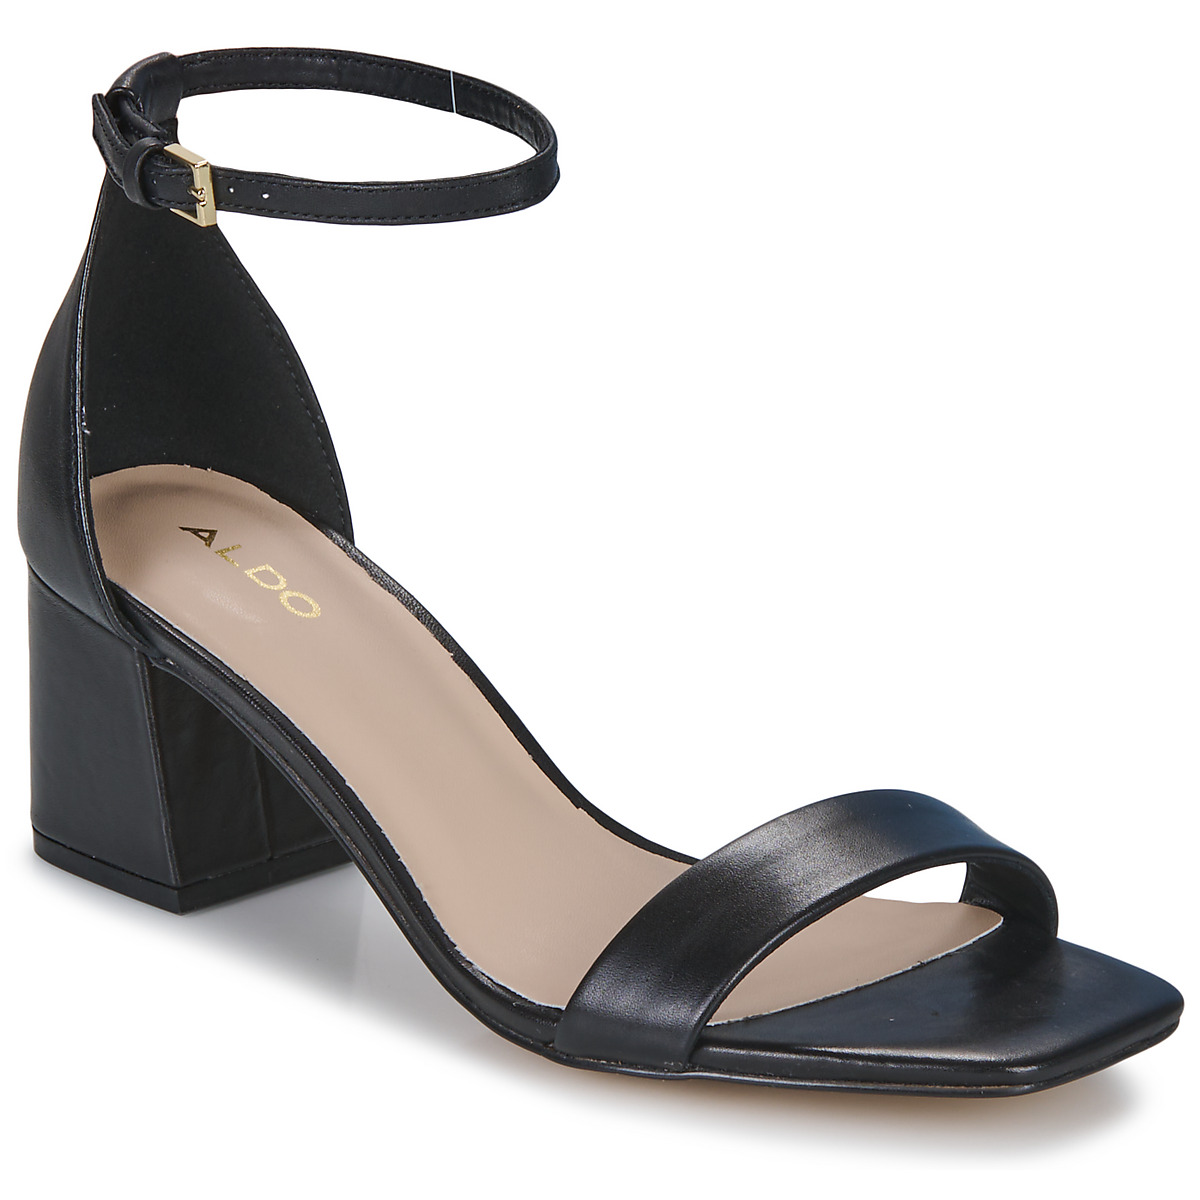 Chaussures Femme Lords ALDO Wicilama 13191250 220 Aldo KEDEAVIEL Noir